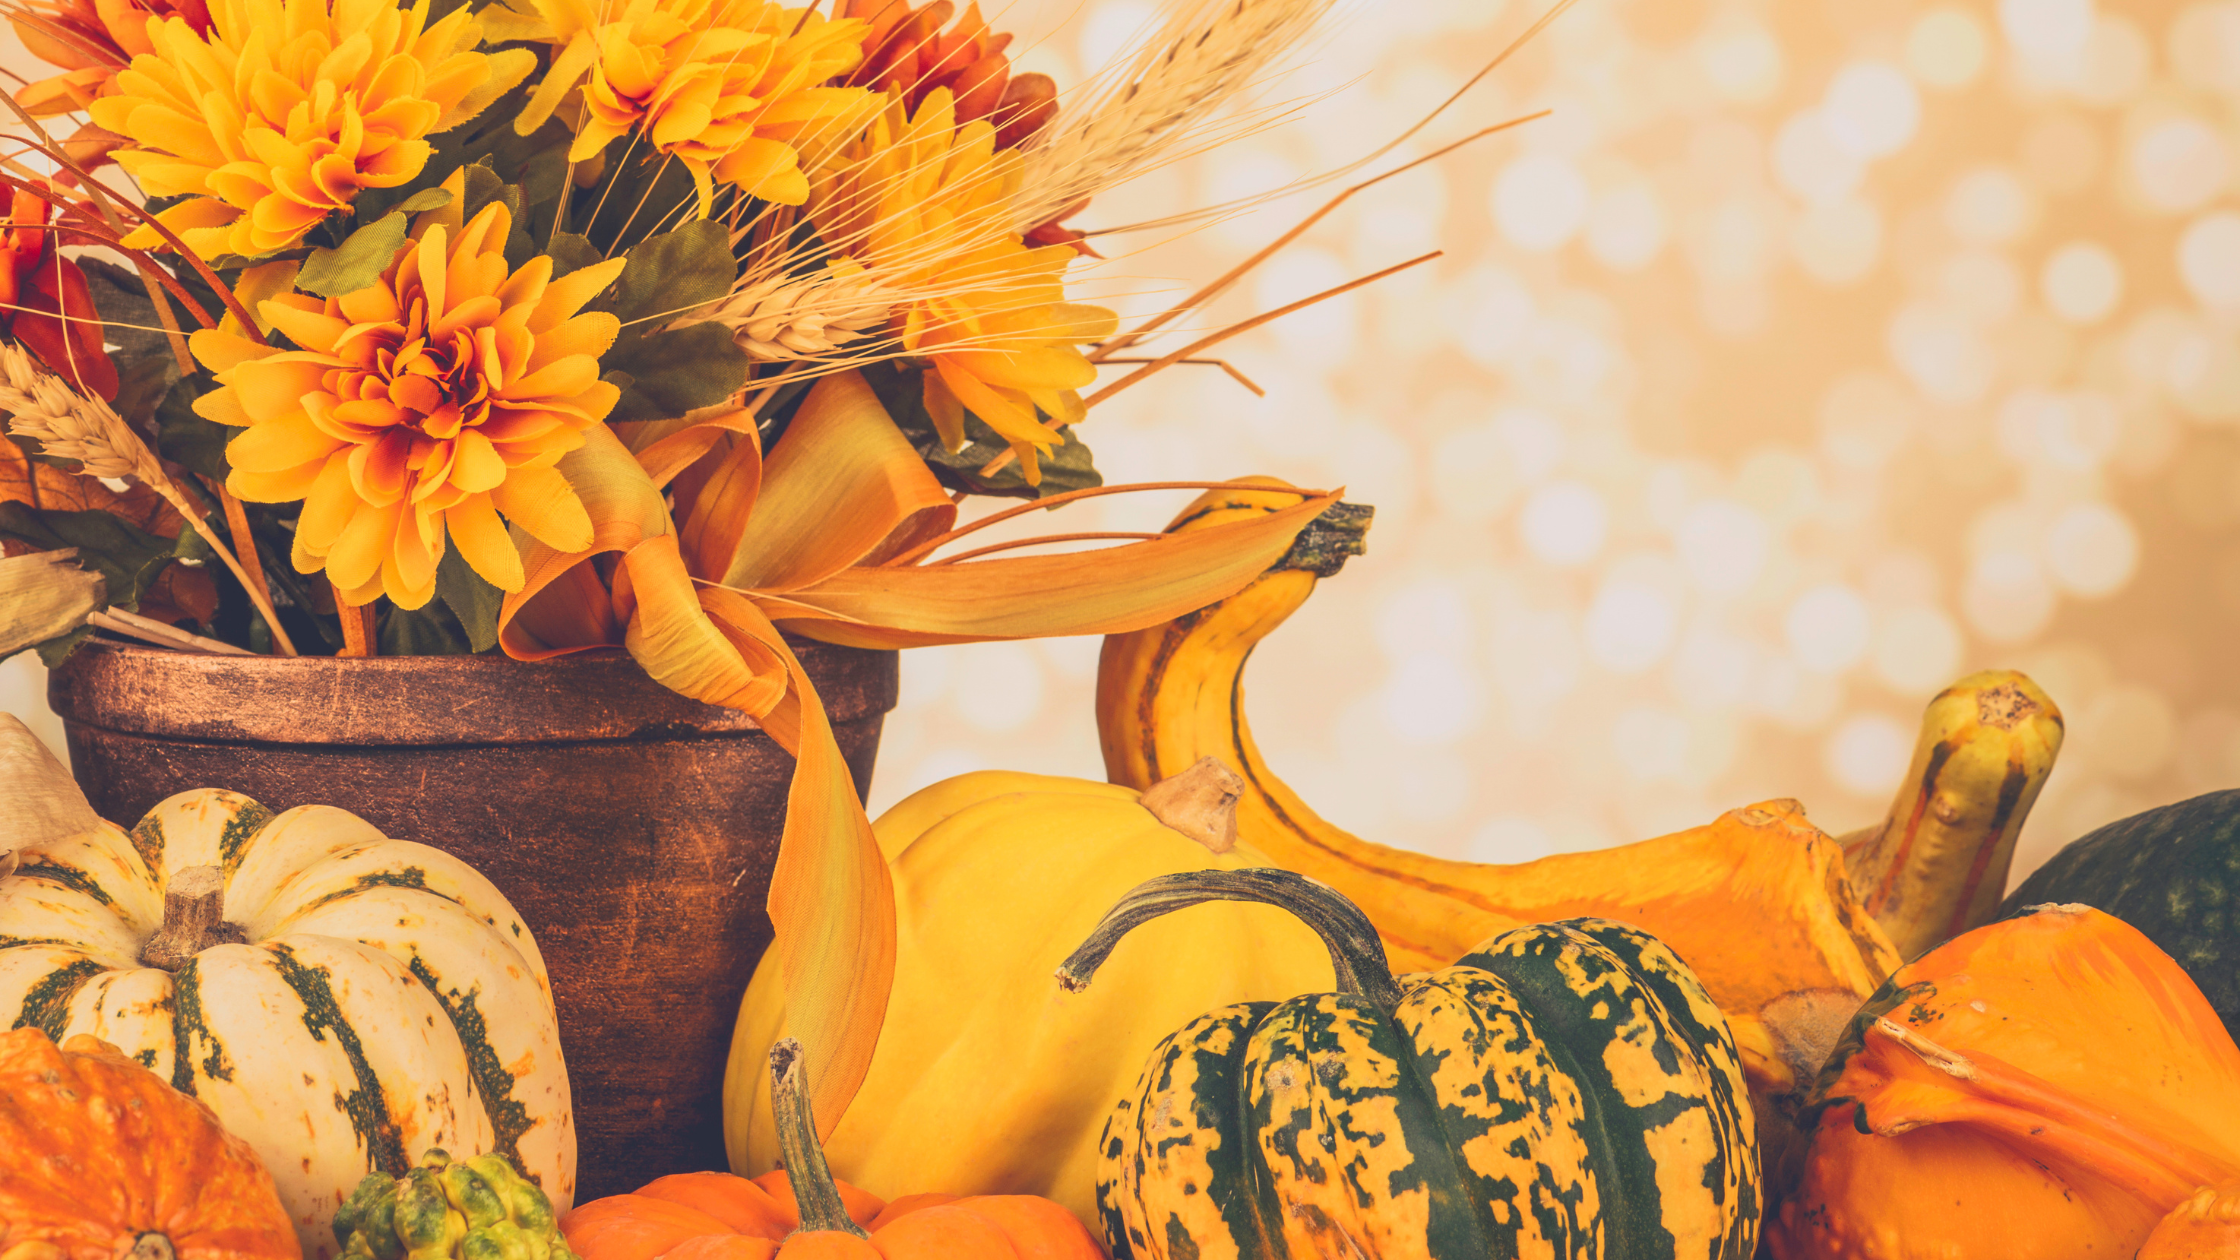 November: The Month of Gratitude